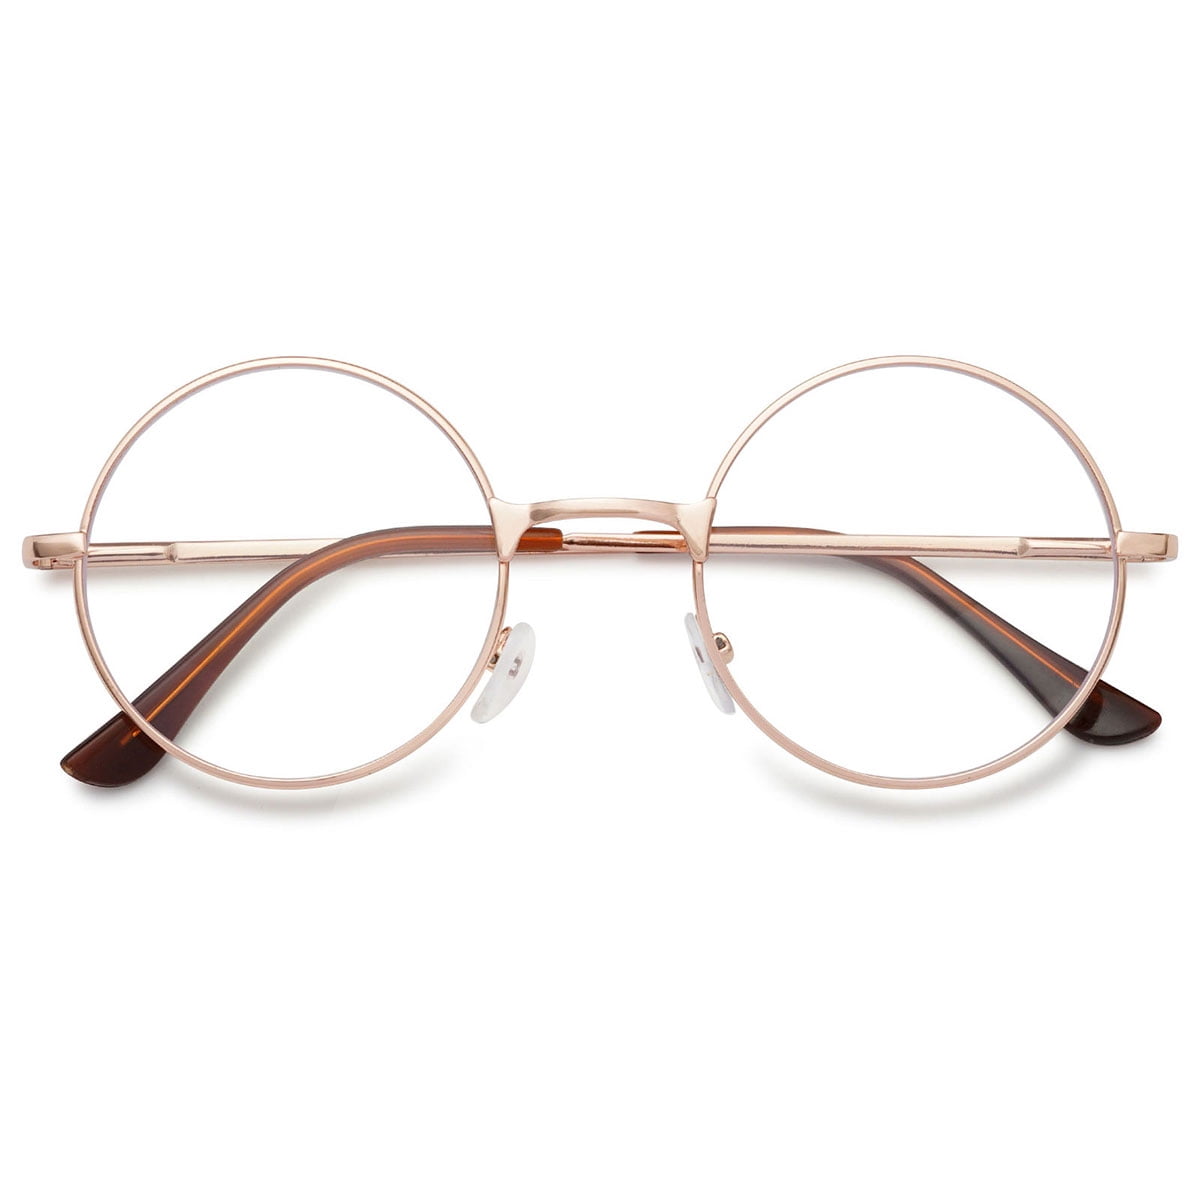 MAGIMODAC Retro Round Metal Reading Glasses Eyeglasses Eyewear Readers ...